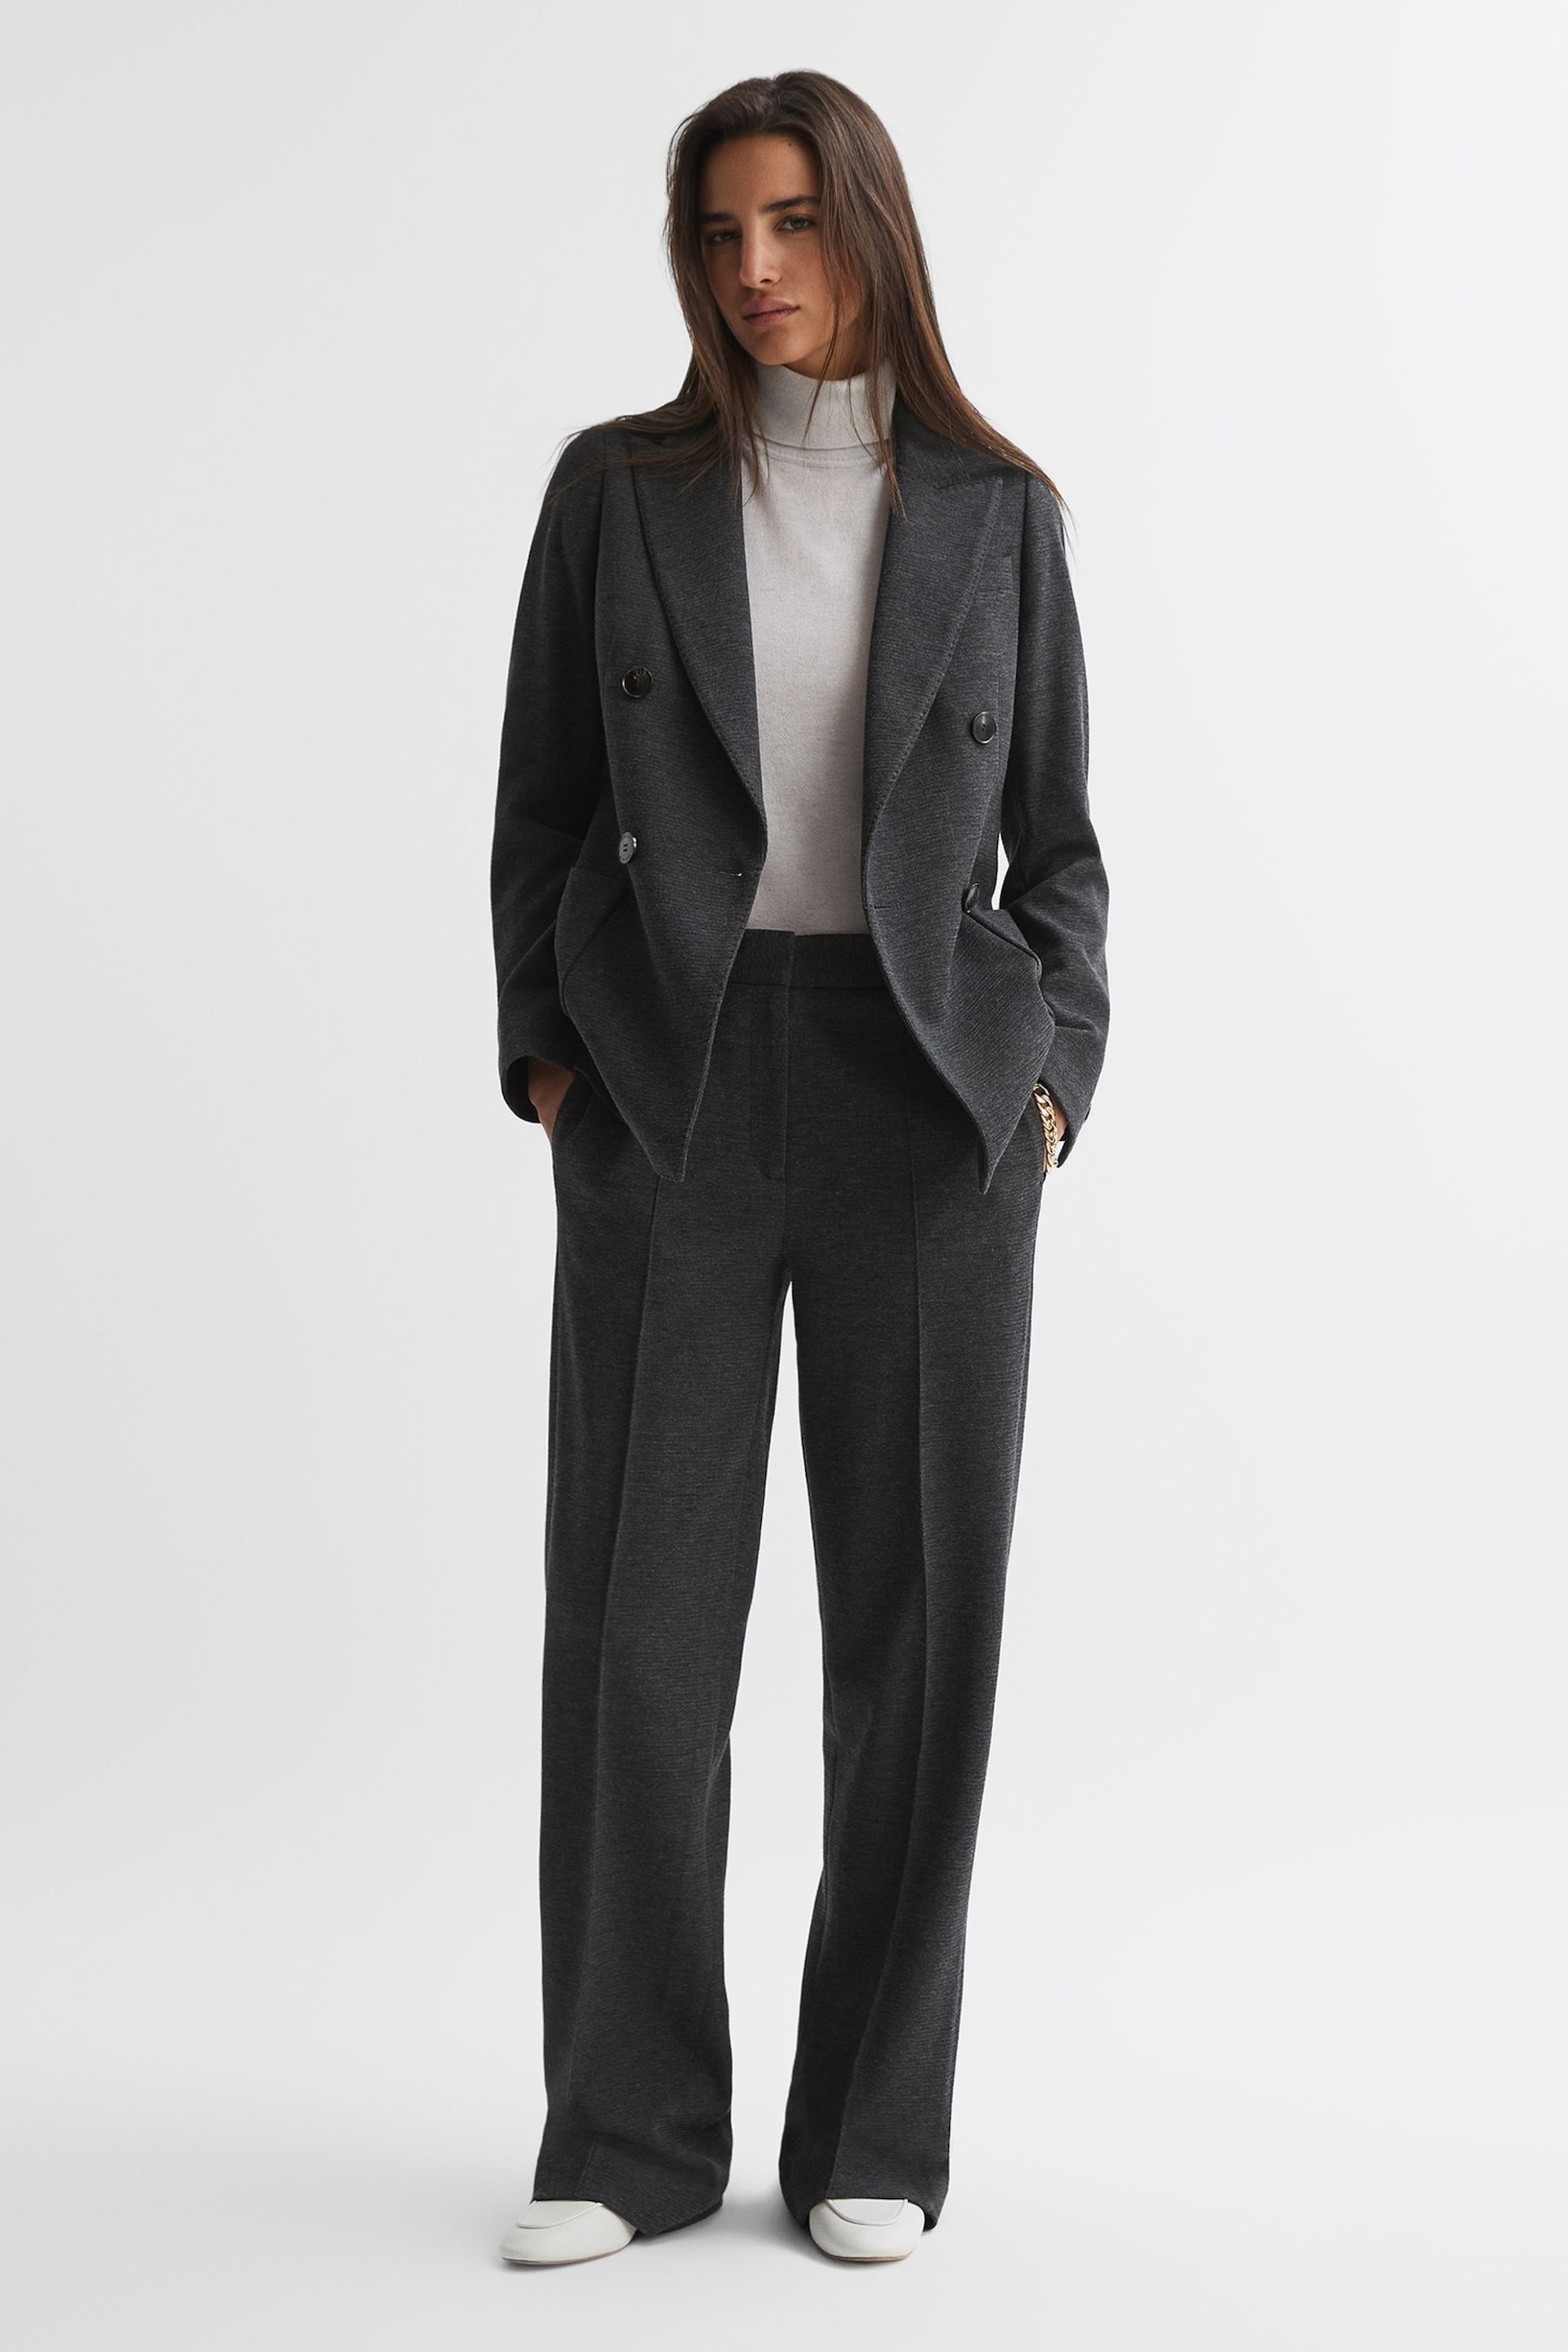 Reiss Grey Melange Iria Double Breasted Wool Blend Suit Blazer - Image 1 of 5